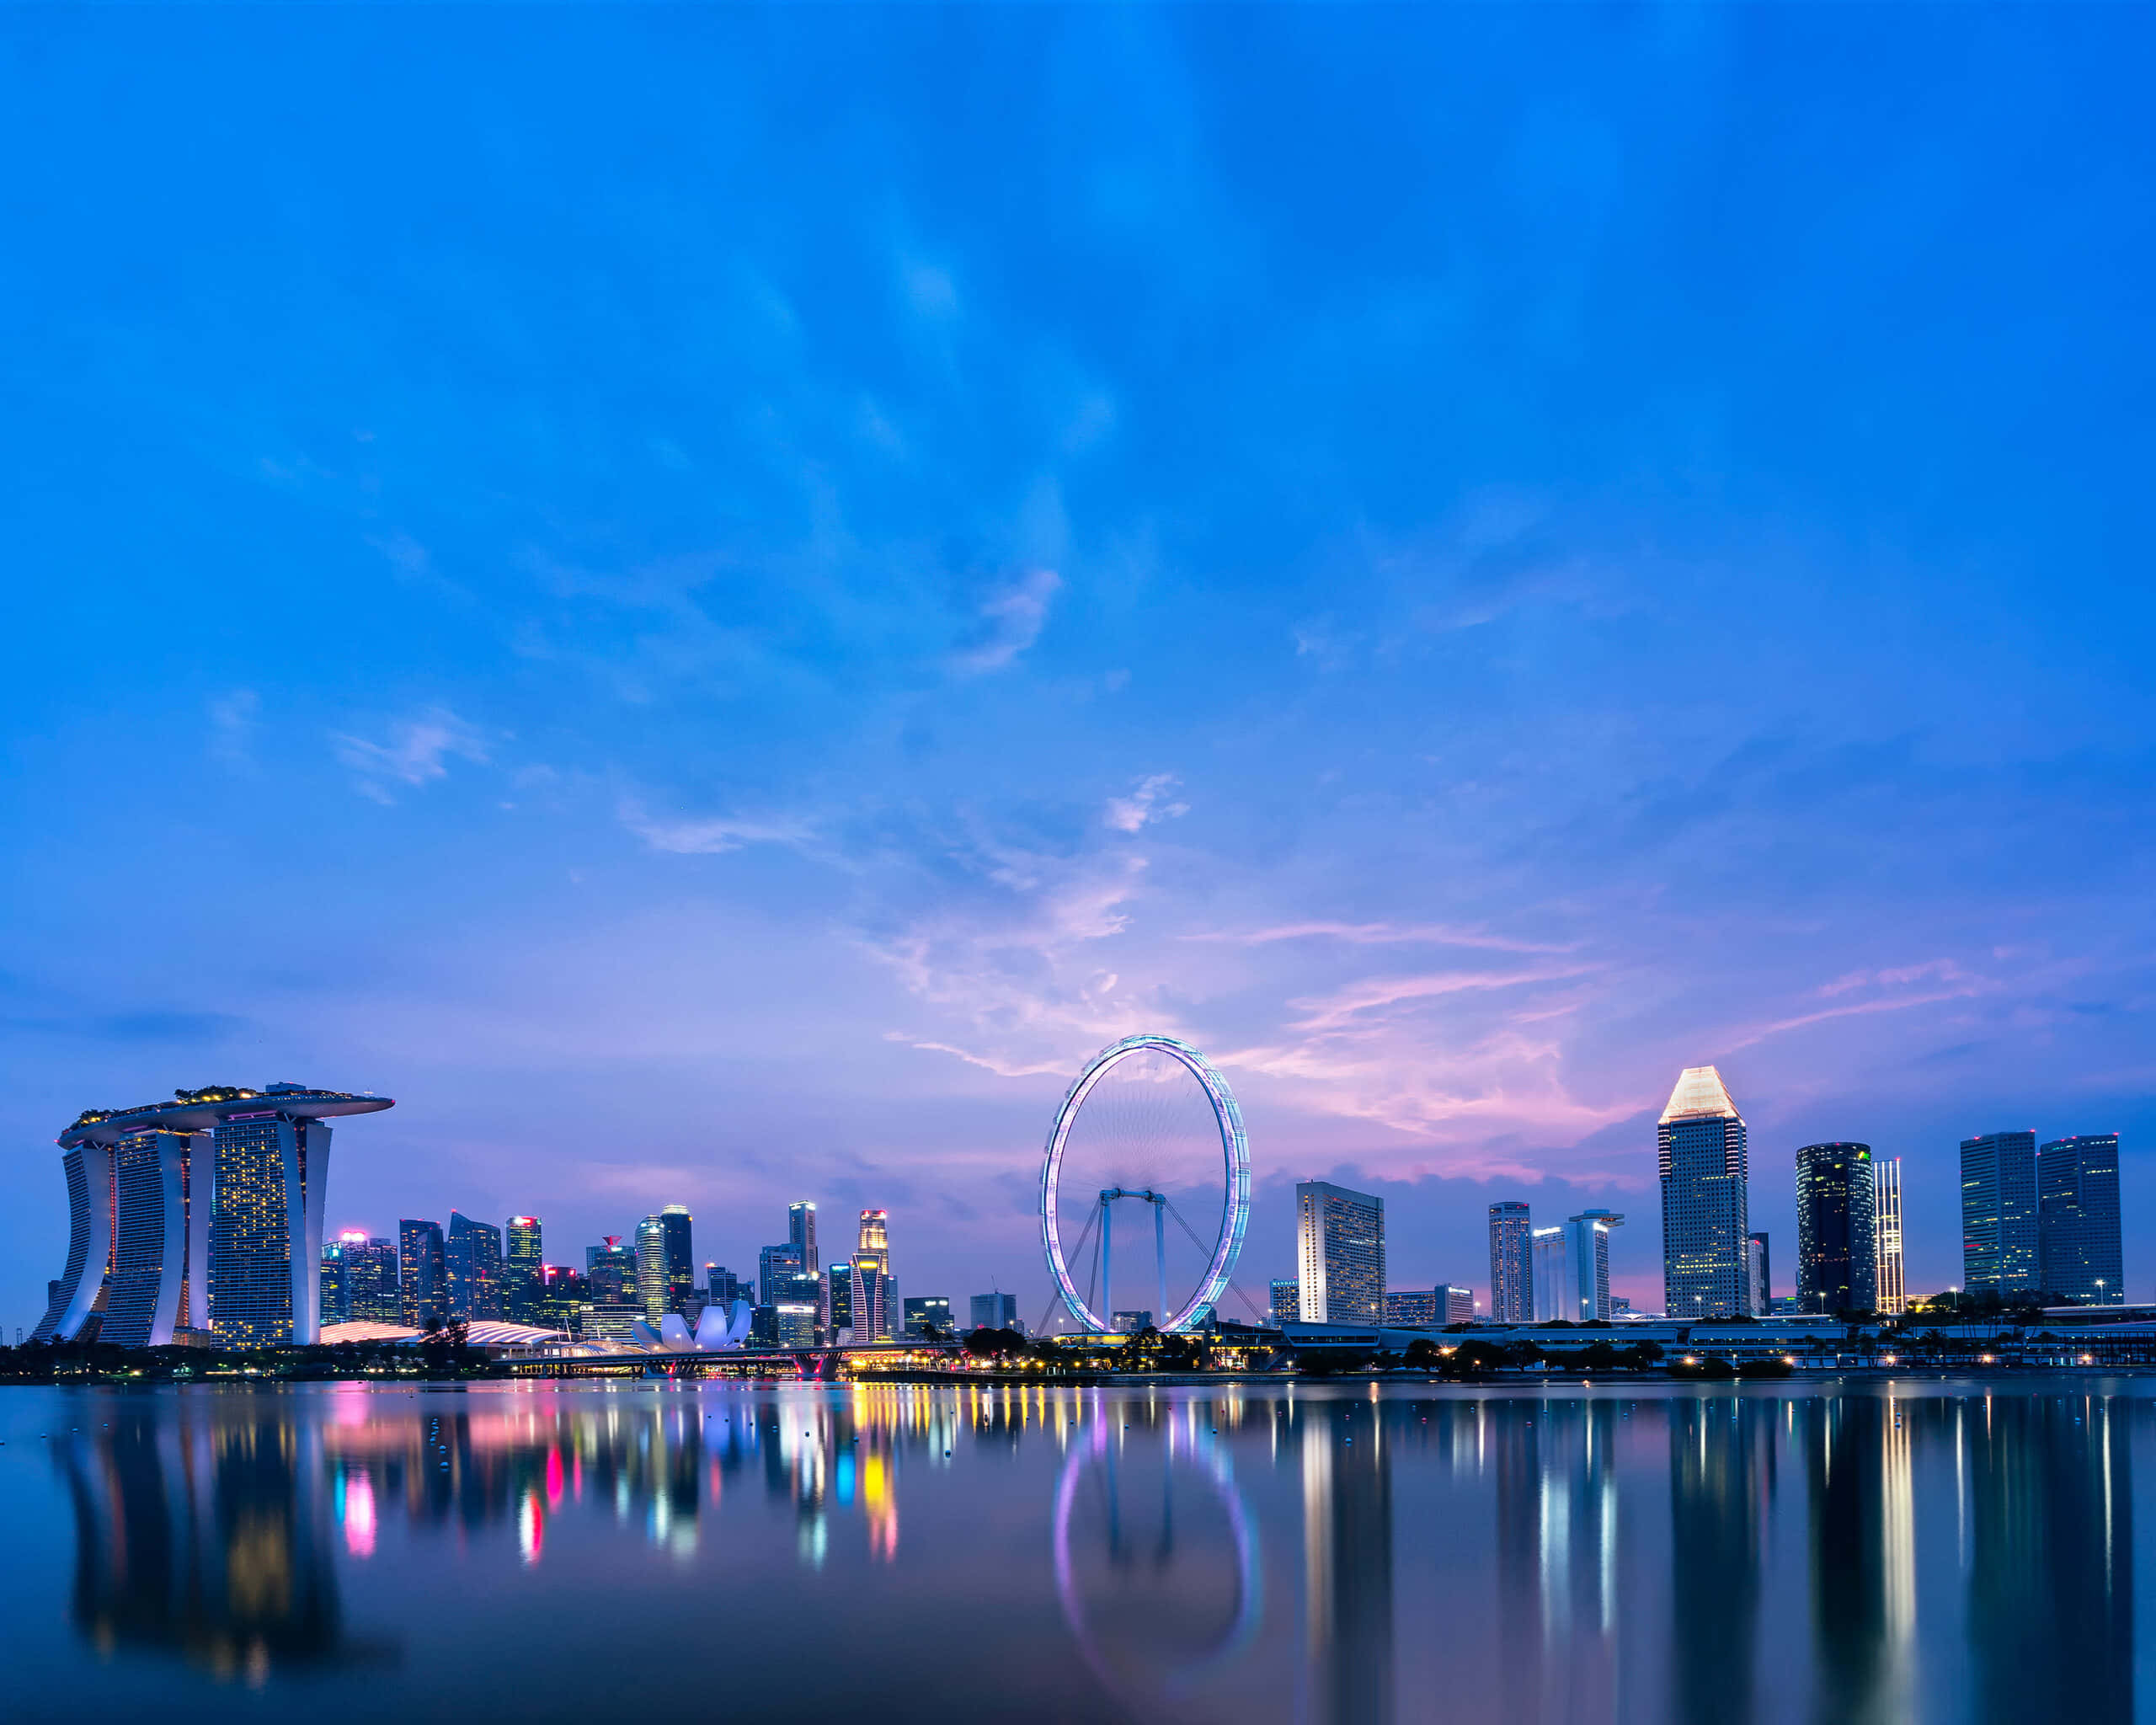 Singapore's picturesque skyline